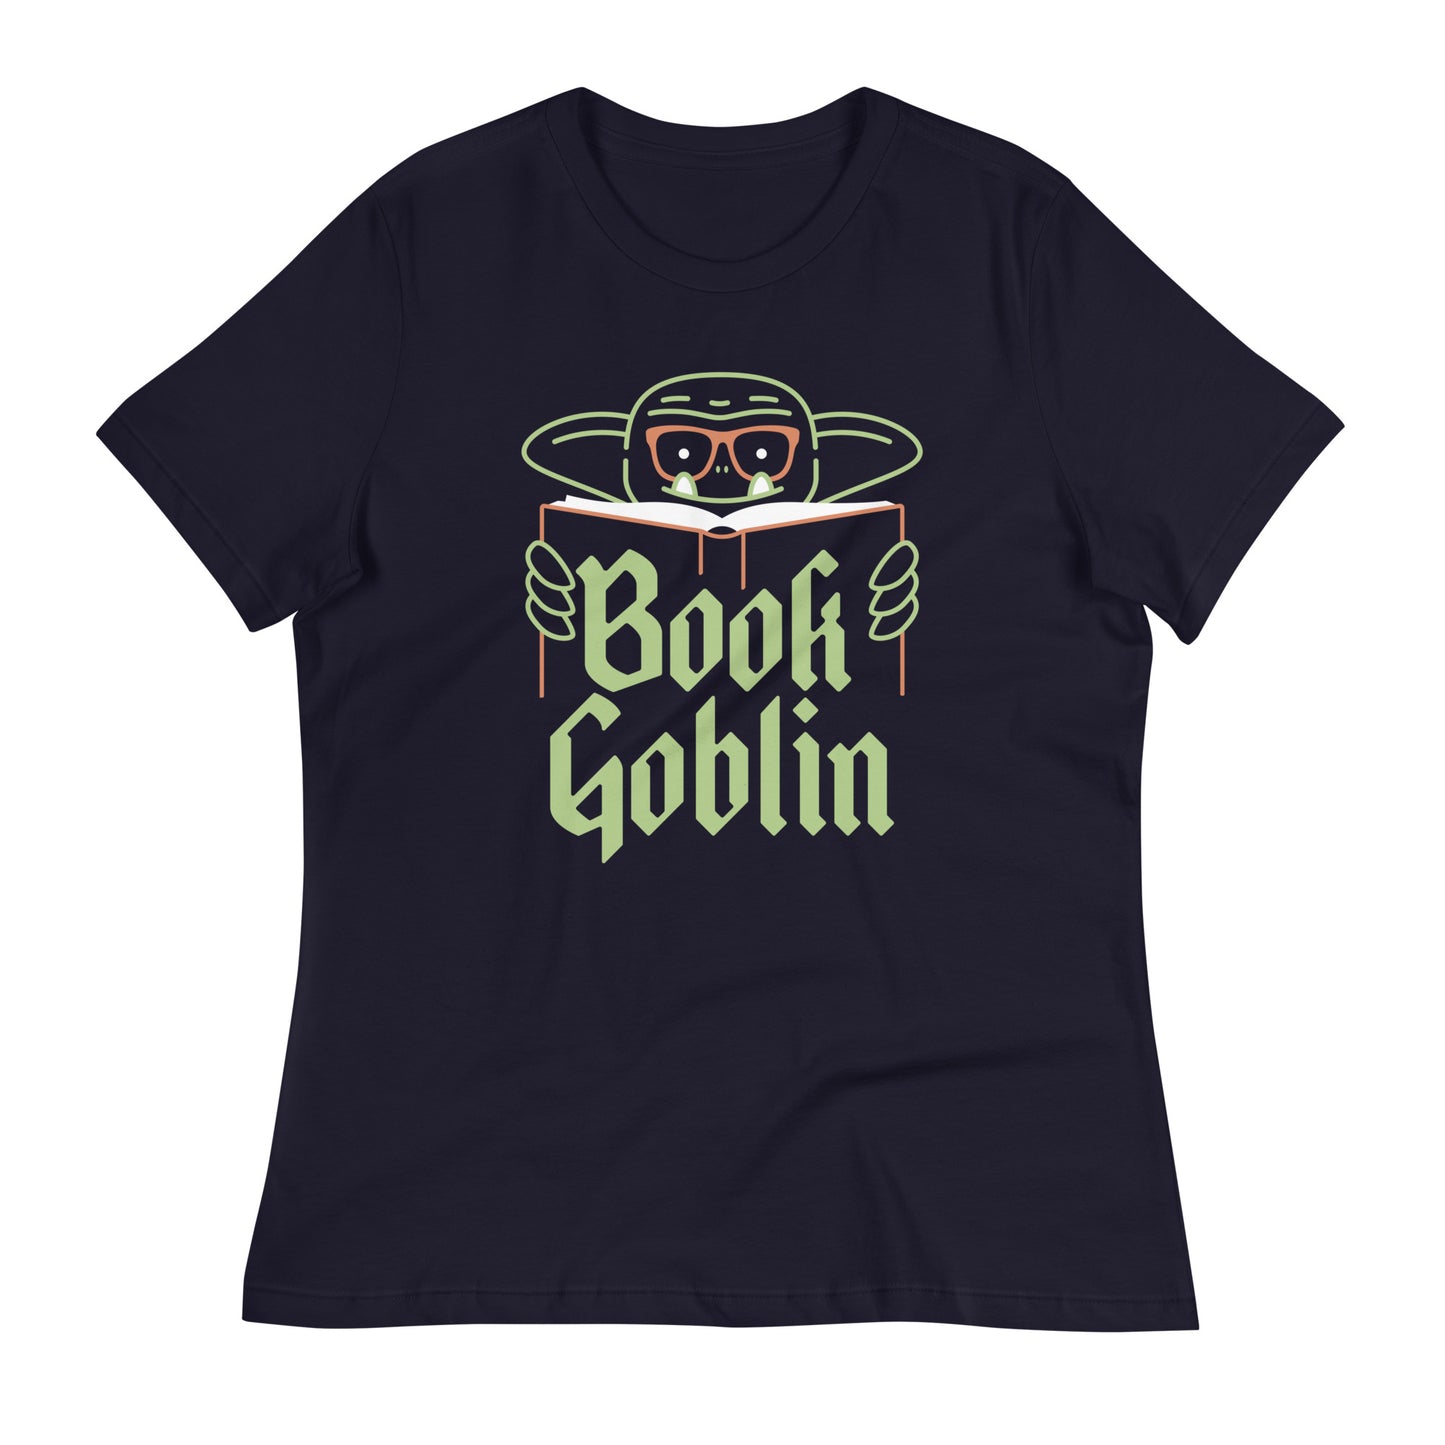 Book Goblin Women's Signature Tee